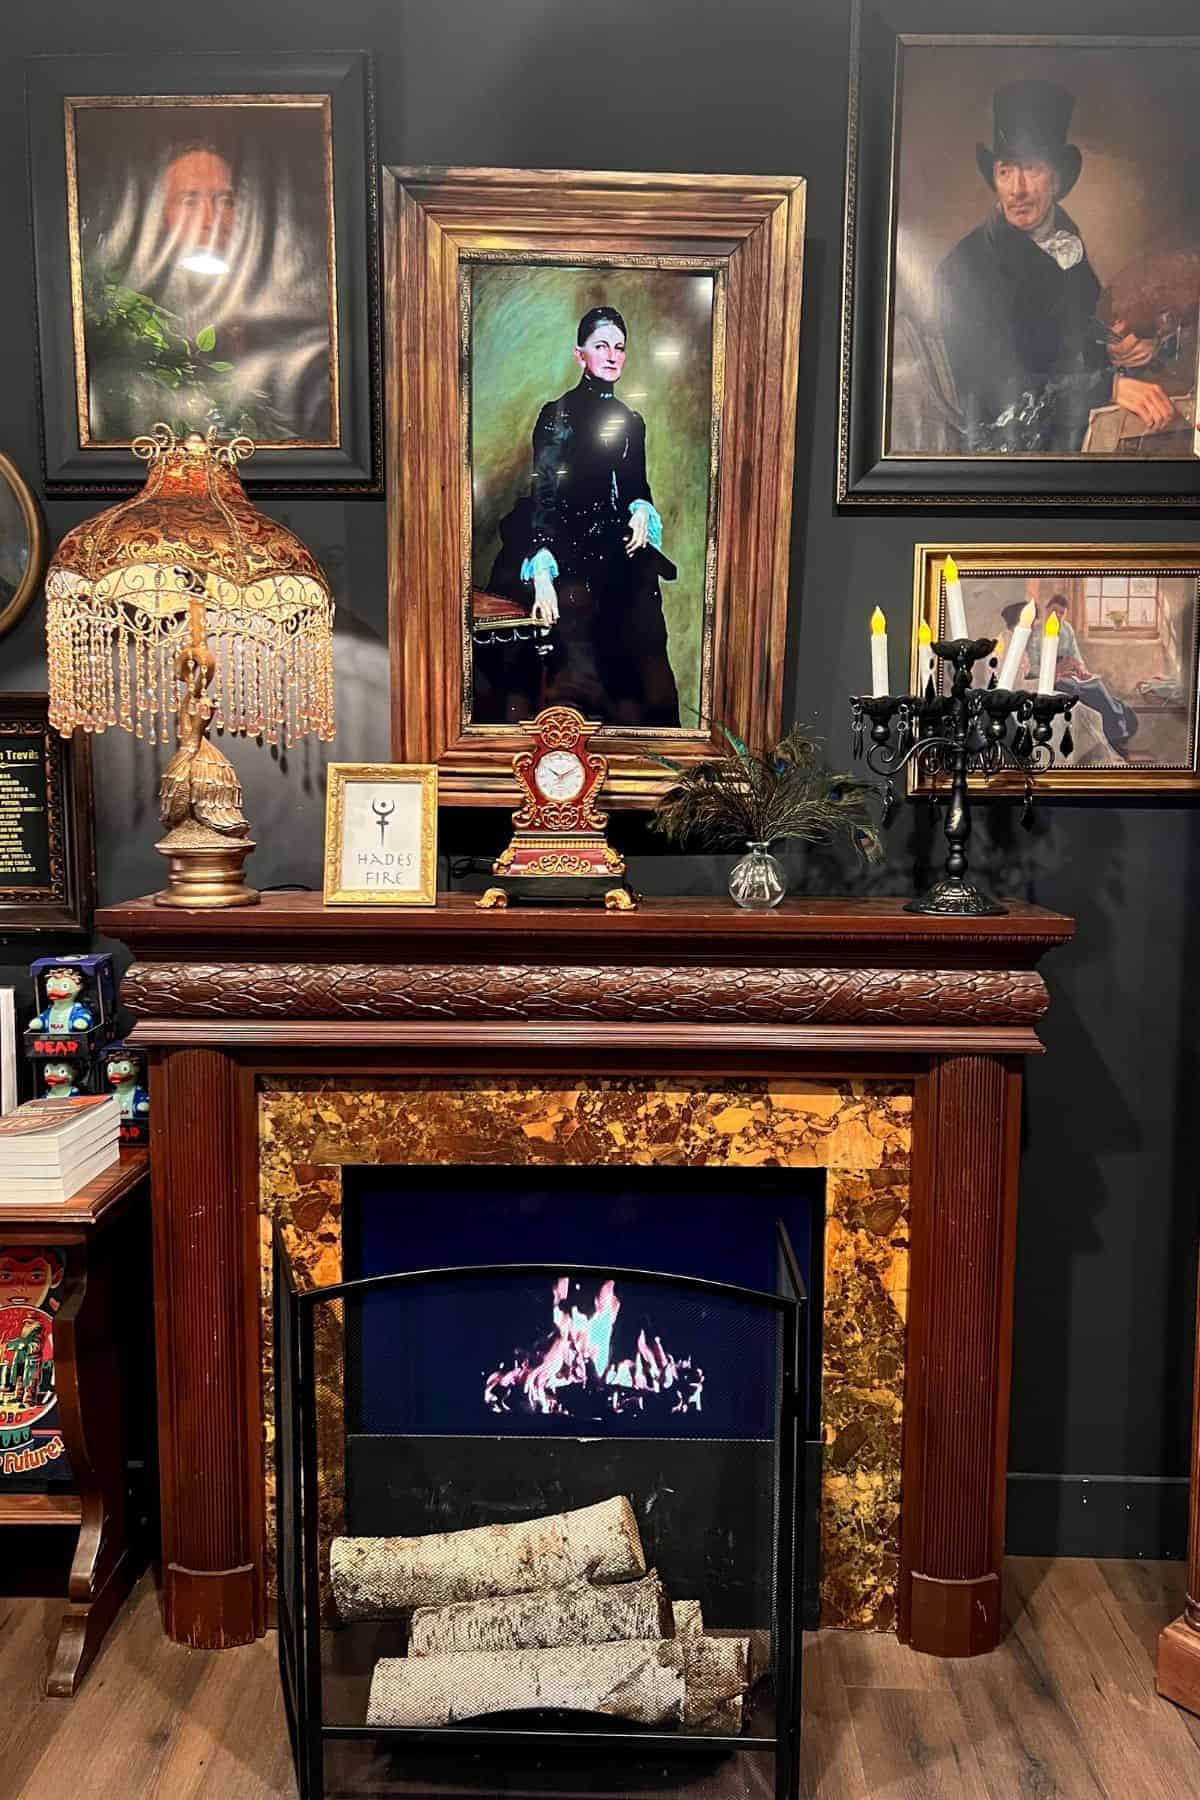 portraits above a fireplace.